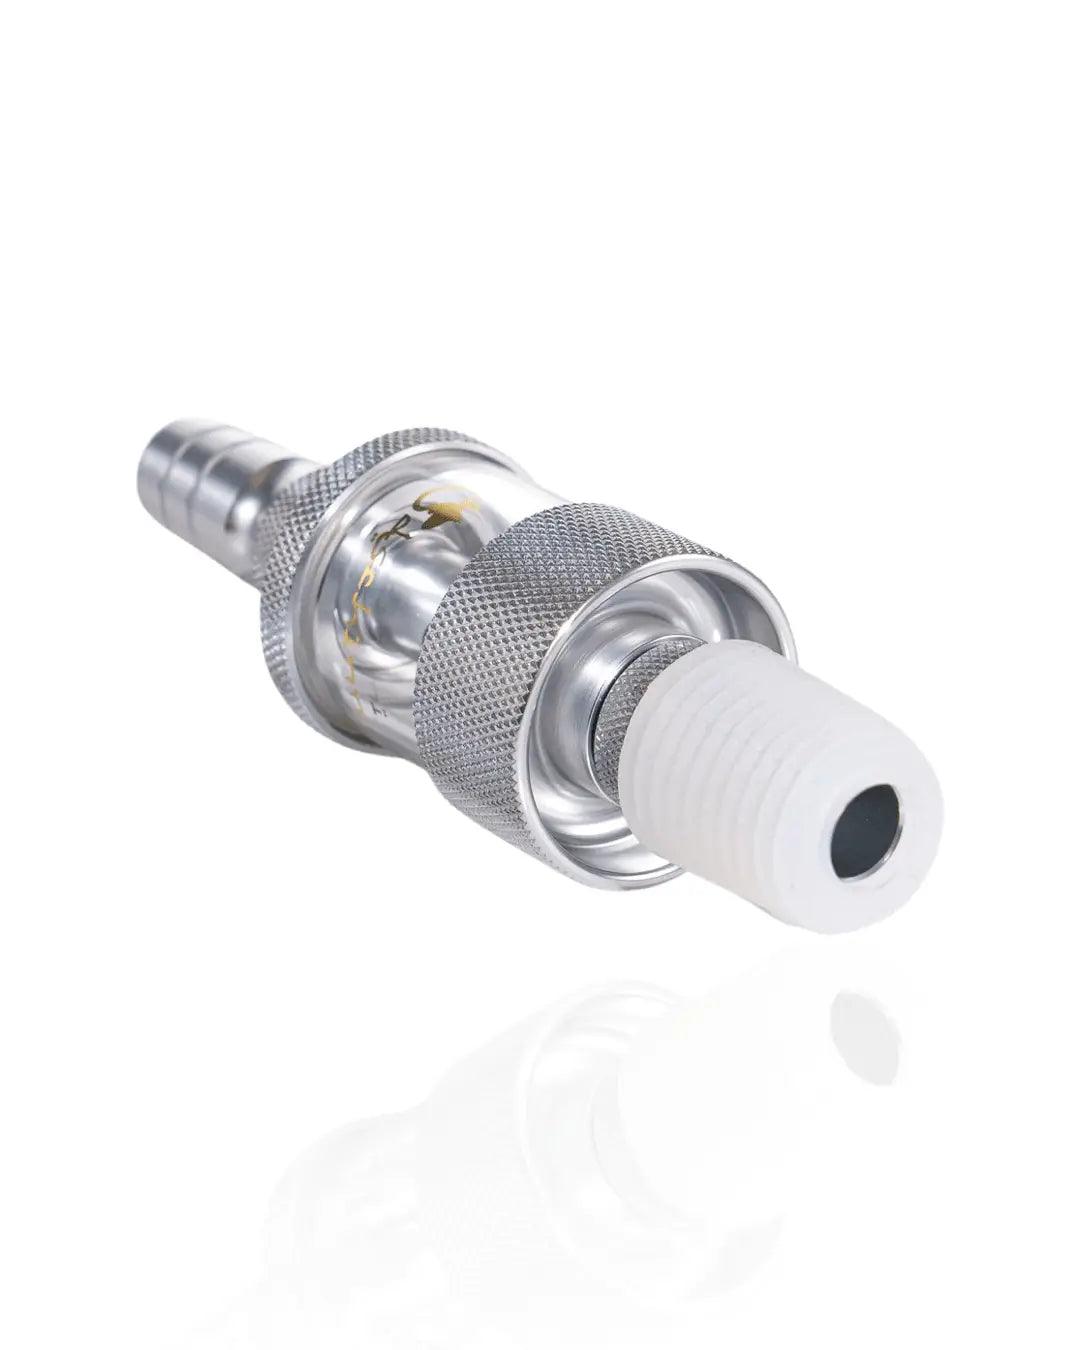 Molassefänger mit Adapter & Ultra Grip Silber - Dschinni GmbH